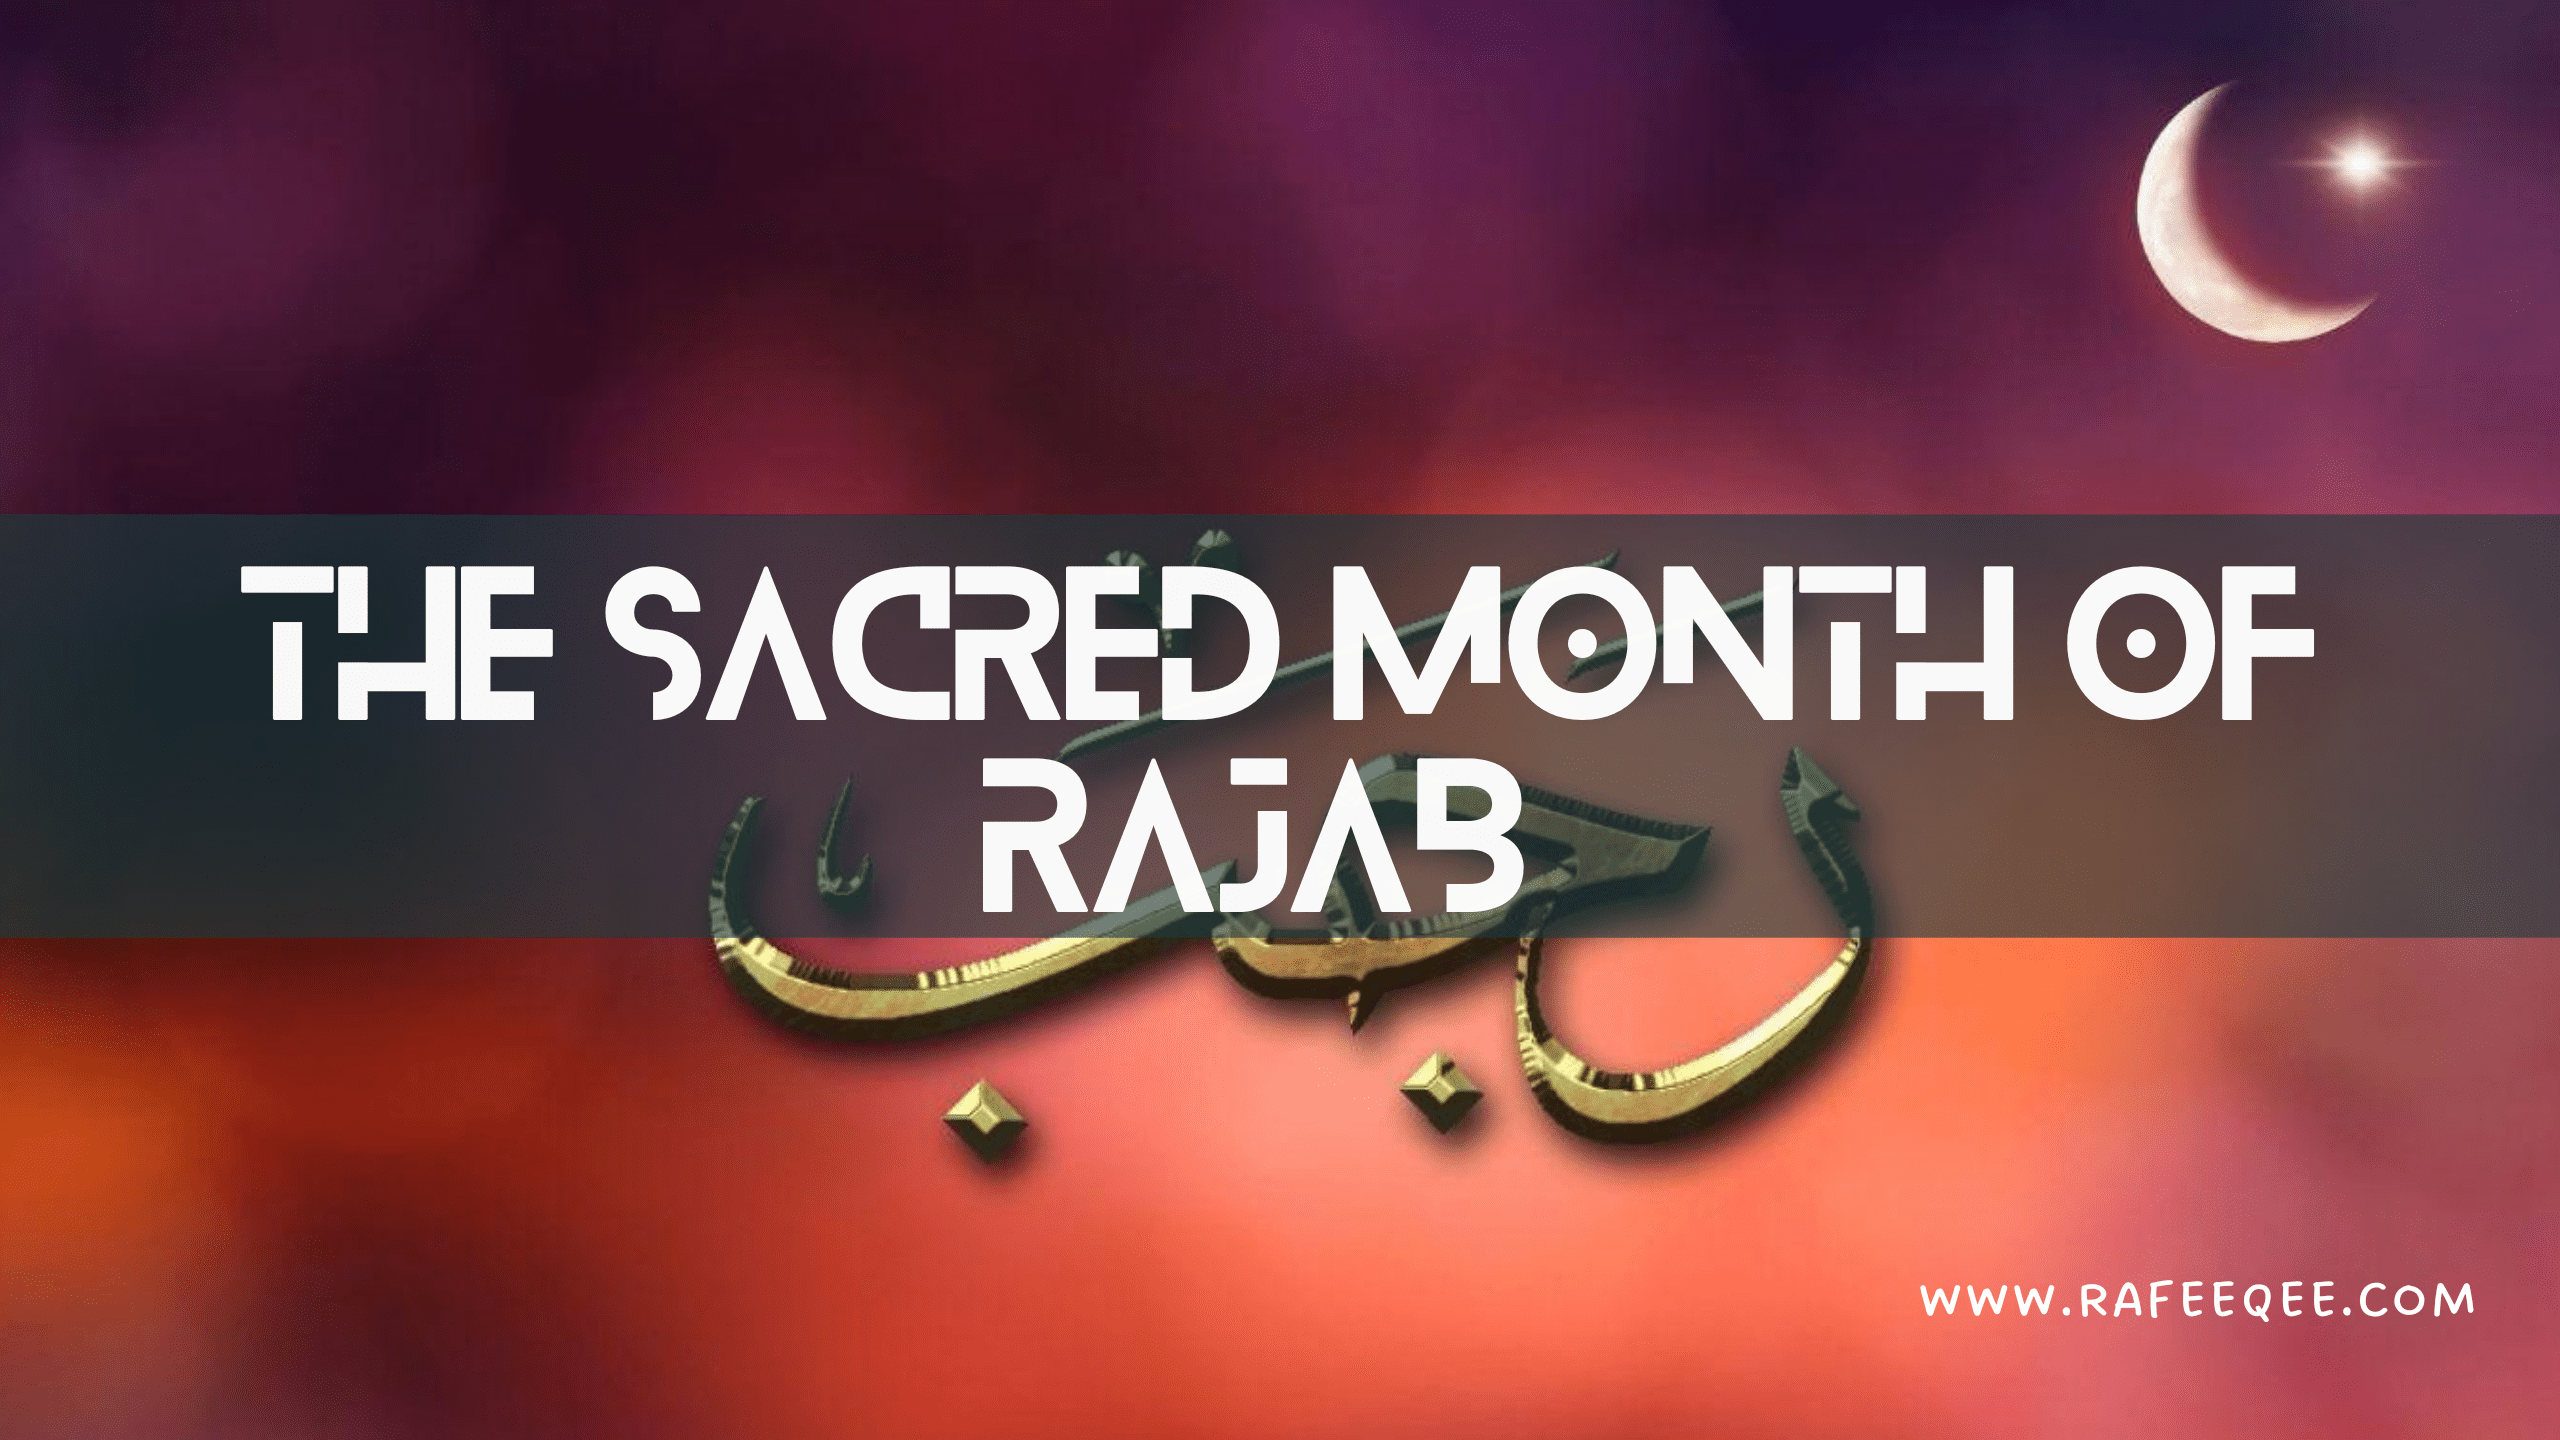 Rajab the sacred month